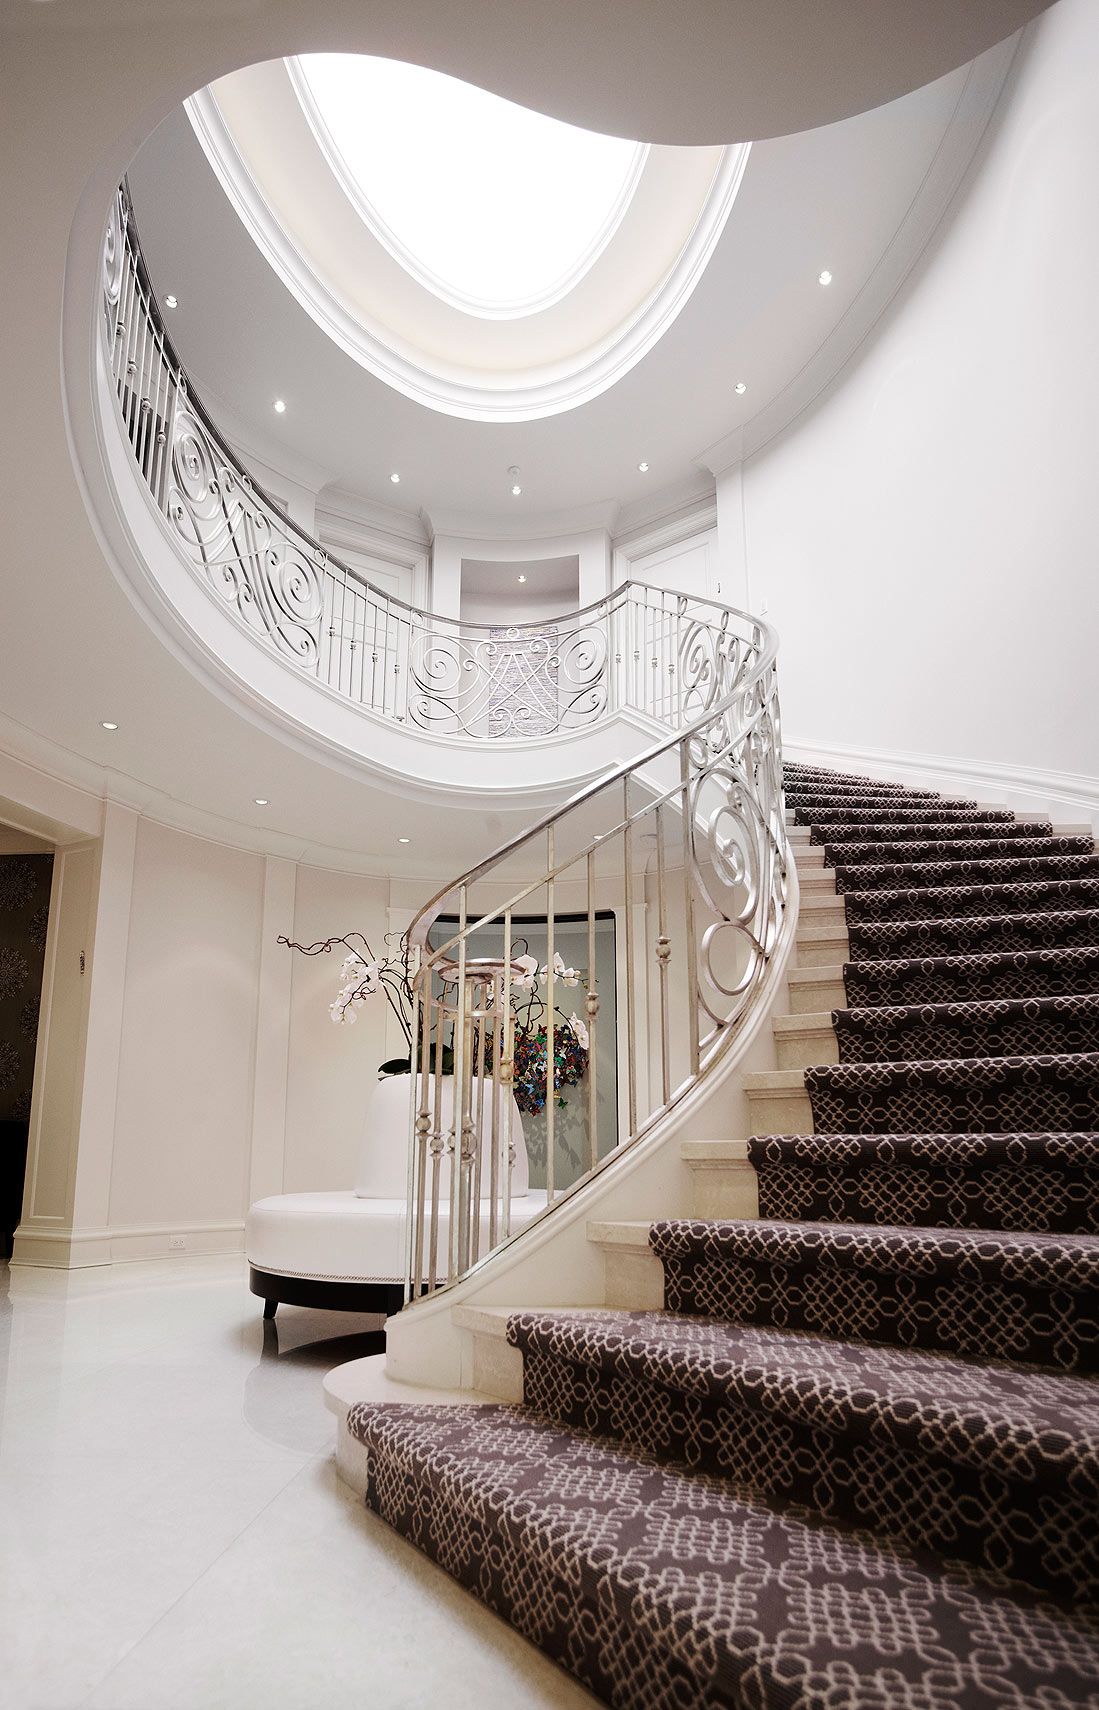 28-interiordesign-transtitional-MakowArchitects-008-staircase